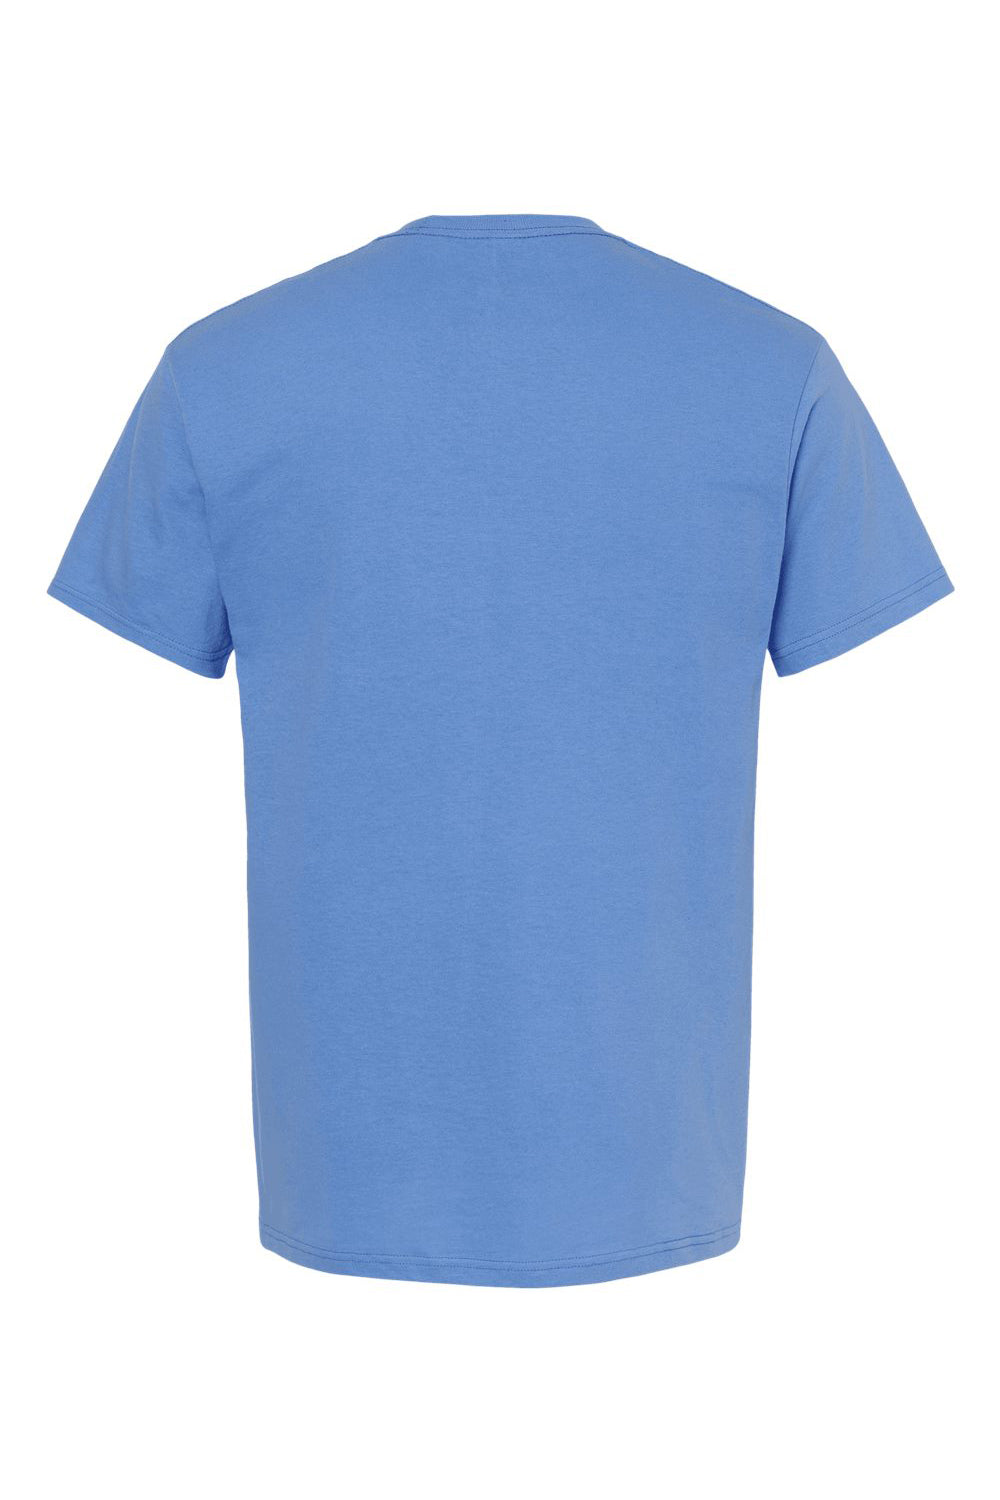 M&O 4800 Mens Gold Soft Touch Short Sleeve Crewneck T-Shirt Carolina Blue Flat Back